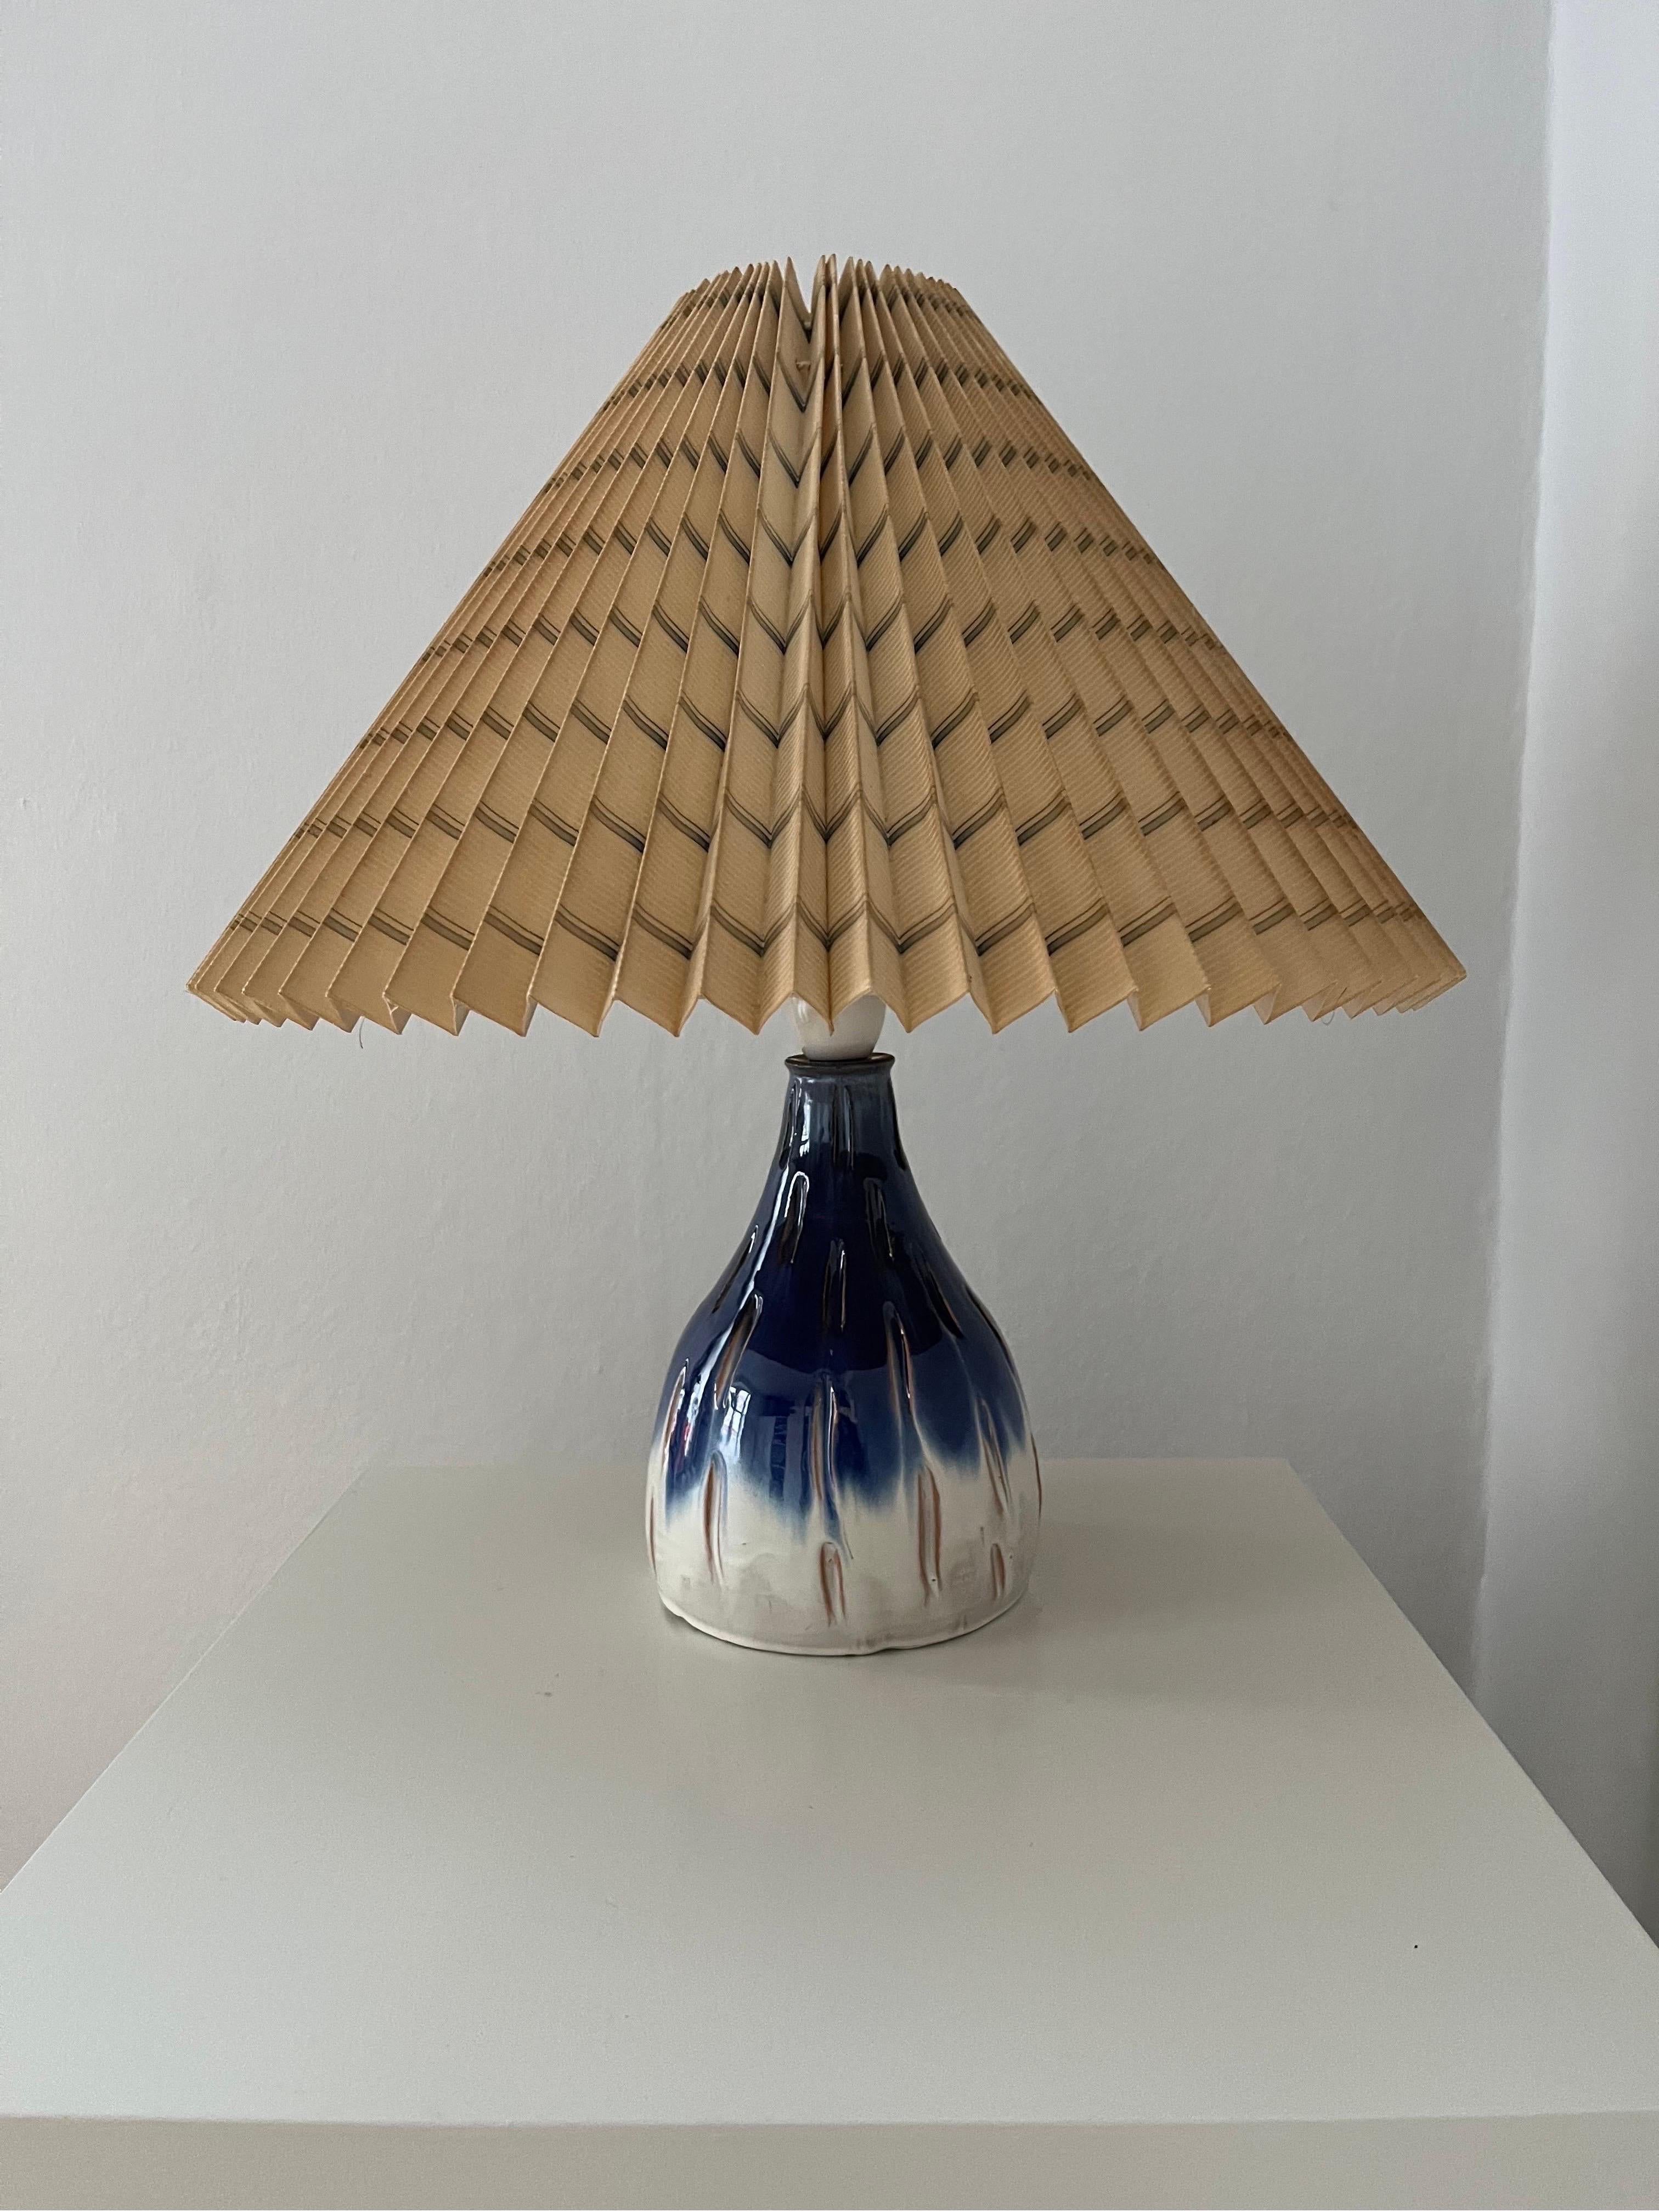 1960s Danish Ceramics Table Lamp by Krogslund Keramik

Illuminate your space with timeless elegance and Danish craftsmanship. This ceramics table lamp by Krogslund Keramik (owned by Erik Krogslund Jensen 1928-1983) is boasting a mesmerizing gradient